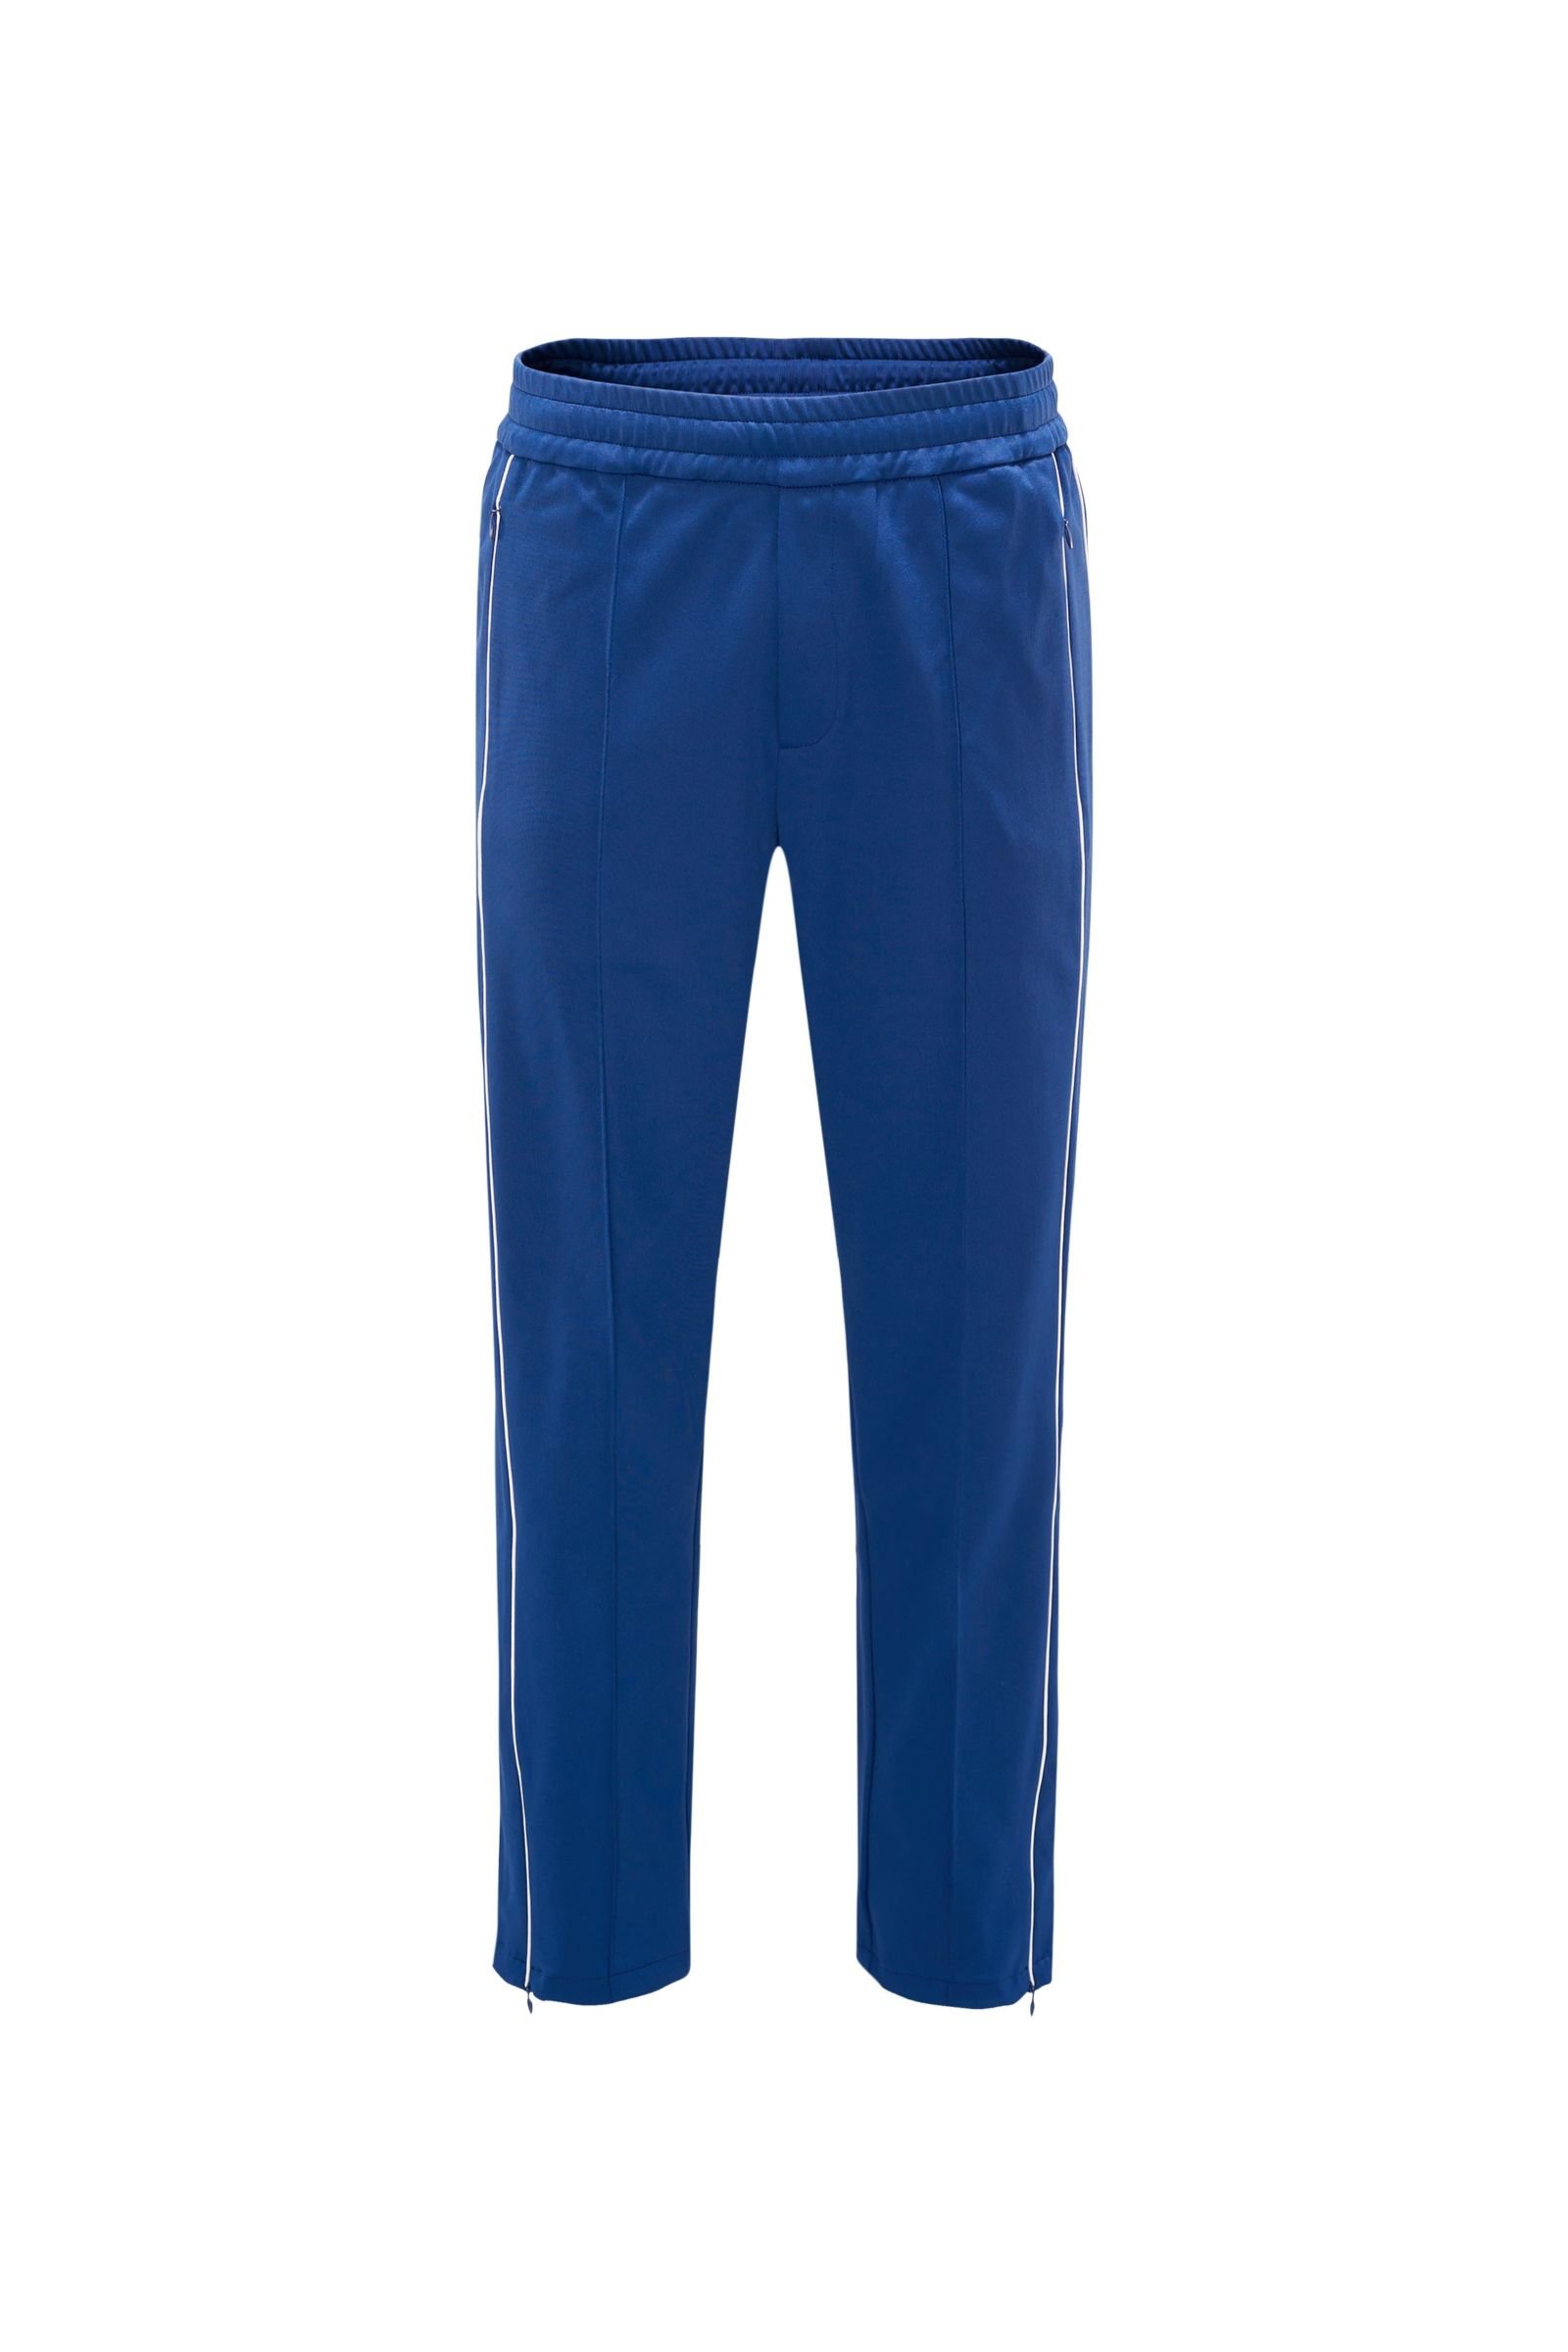 Jogger pants blue